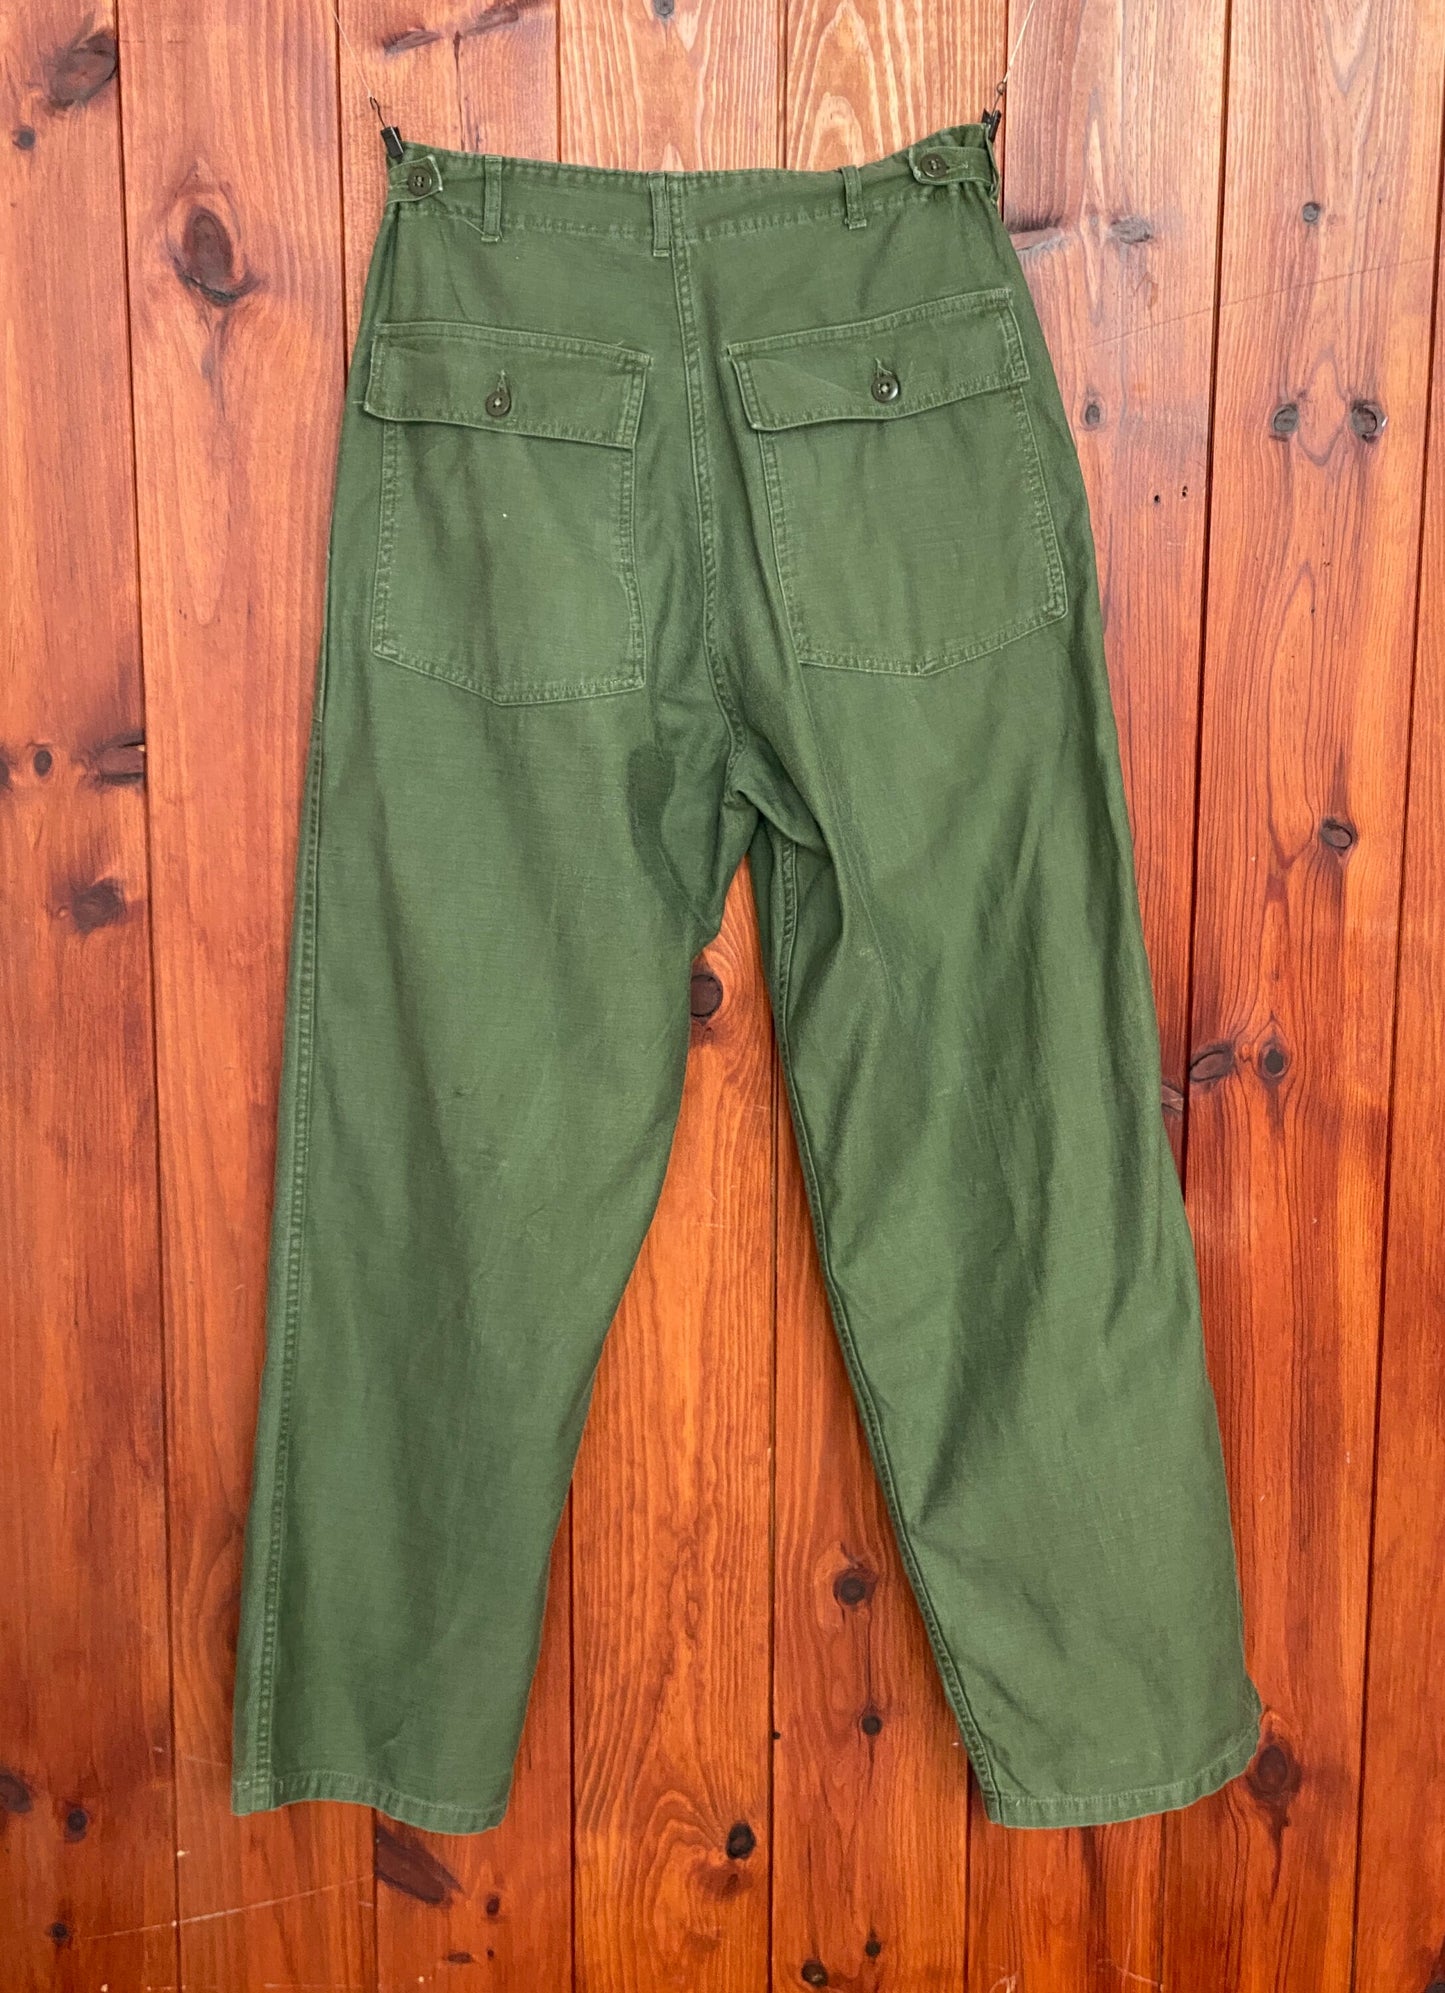 Size Med. Authentic 1961 US army  Vietnam era Fatigue / utility pants